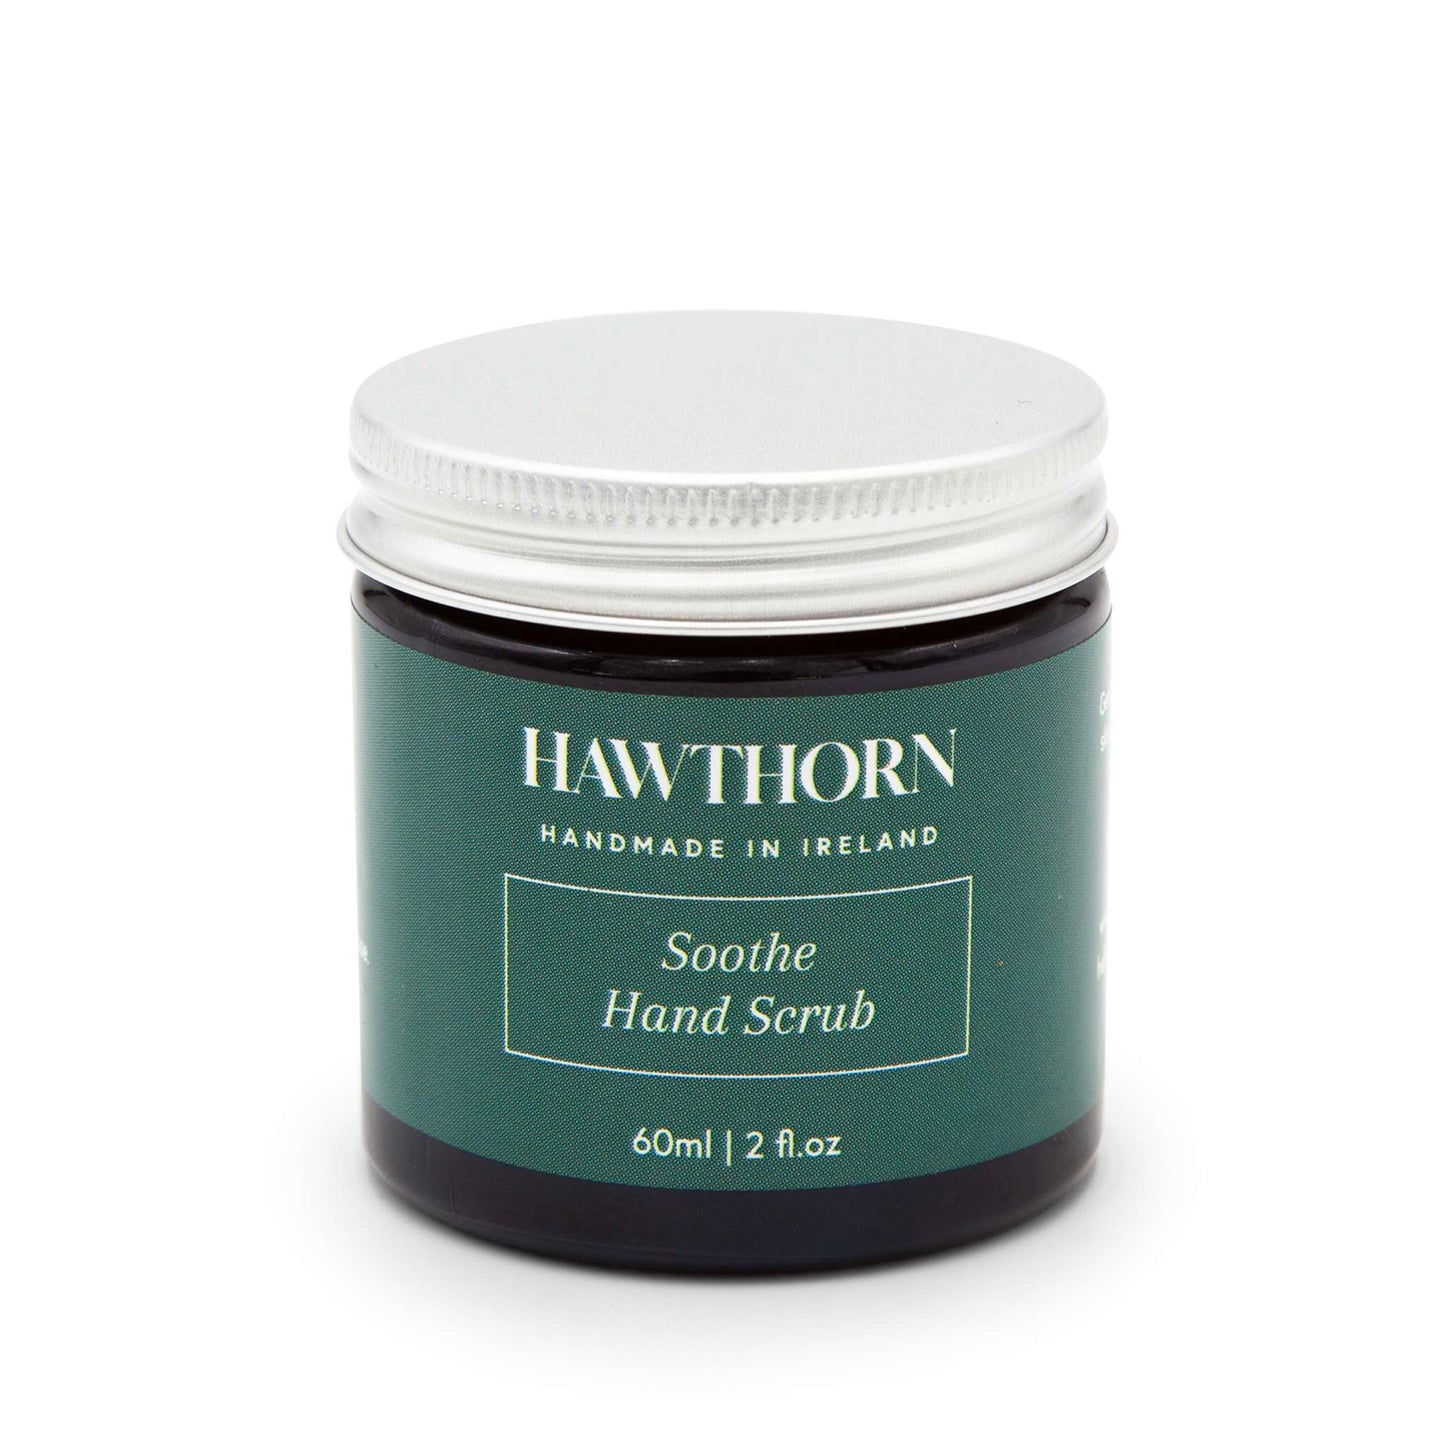 Hawthorn Handmade Skincare Skin Care Soothe Hand Scrub 60ml - Hawthorn Skincare